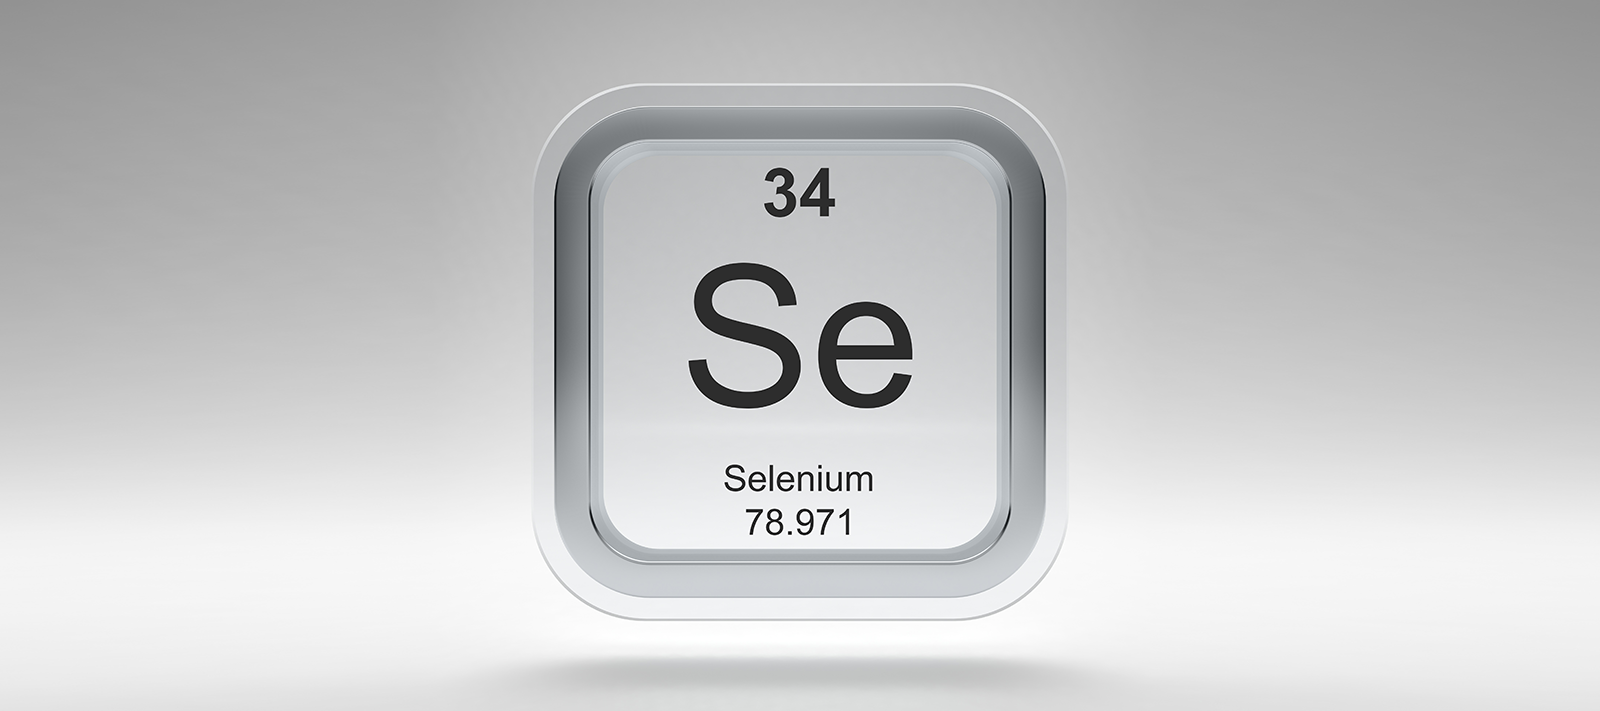 Selenium, Selenoid, Selenide, Selendroid… Что все это значит? - 1